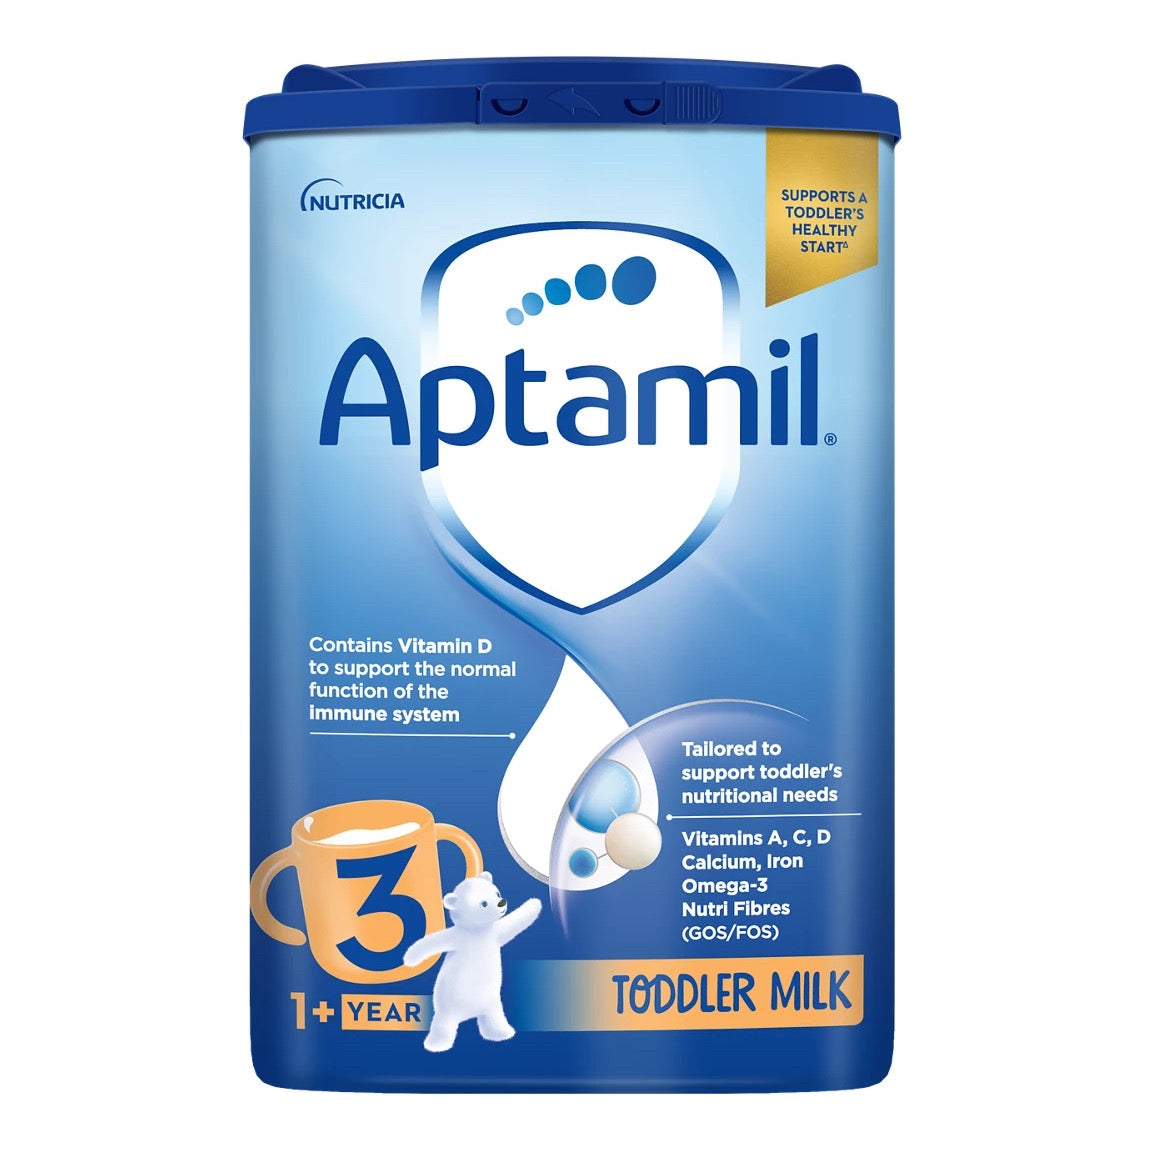 Aptamil 3 Latte 1000 ml